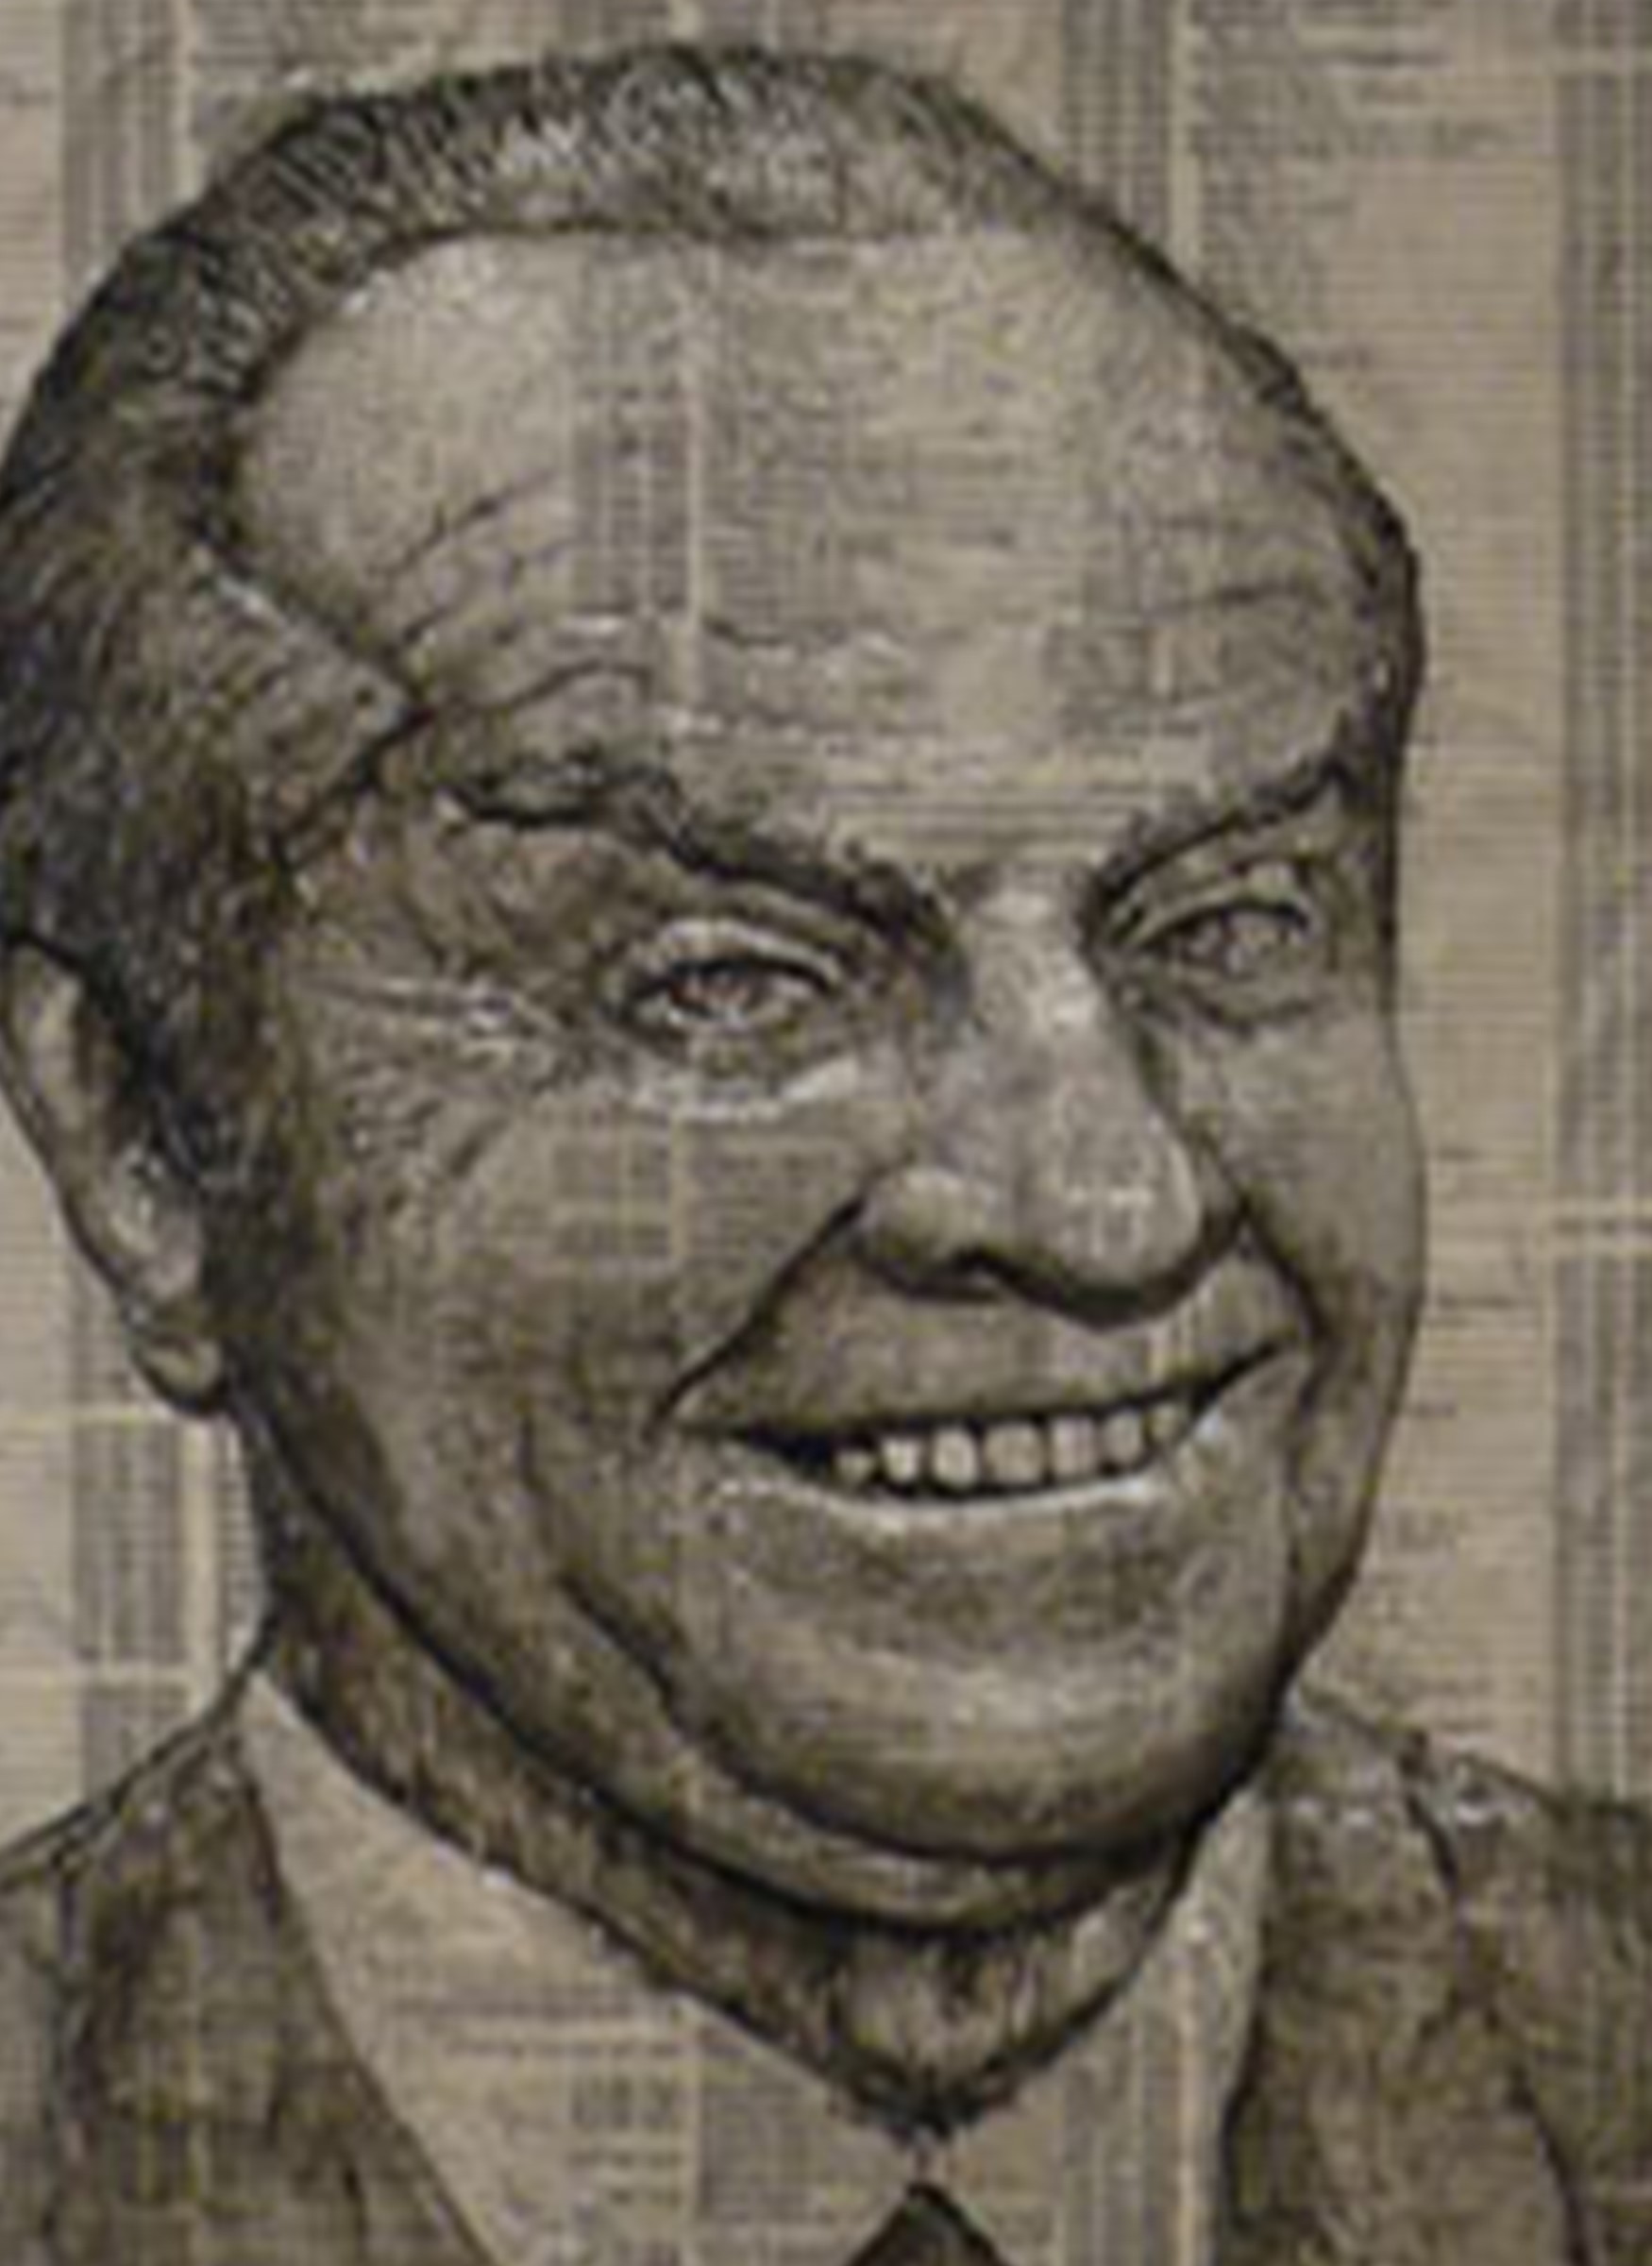 portrait of Jack Nicholson